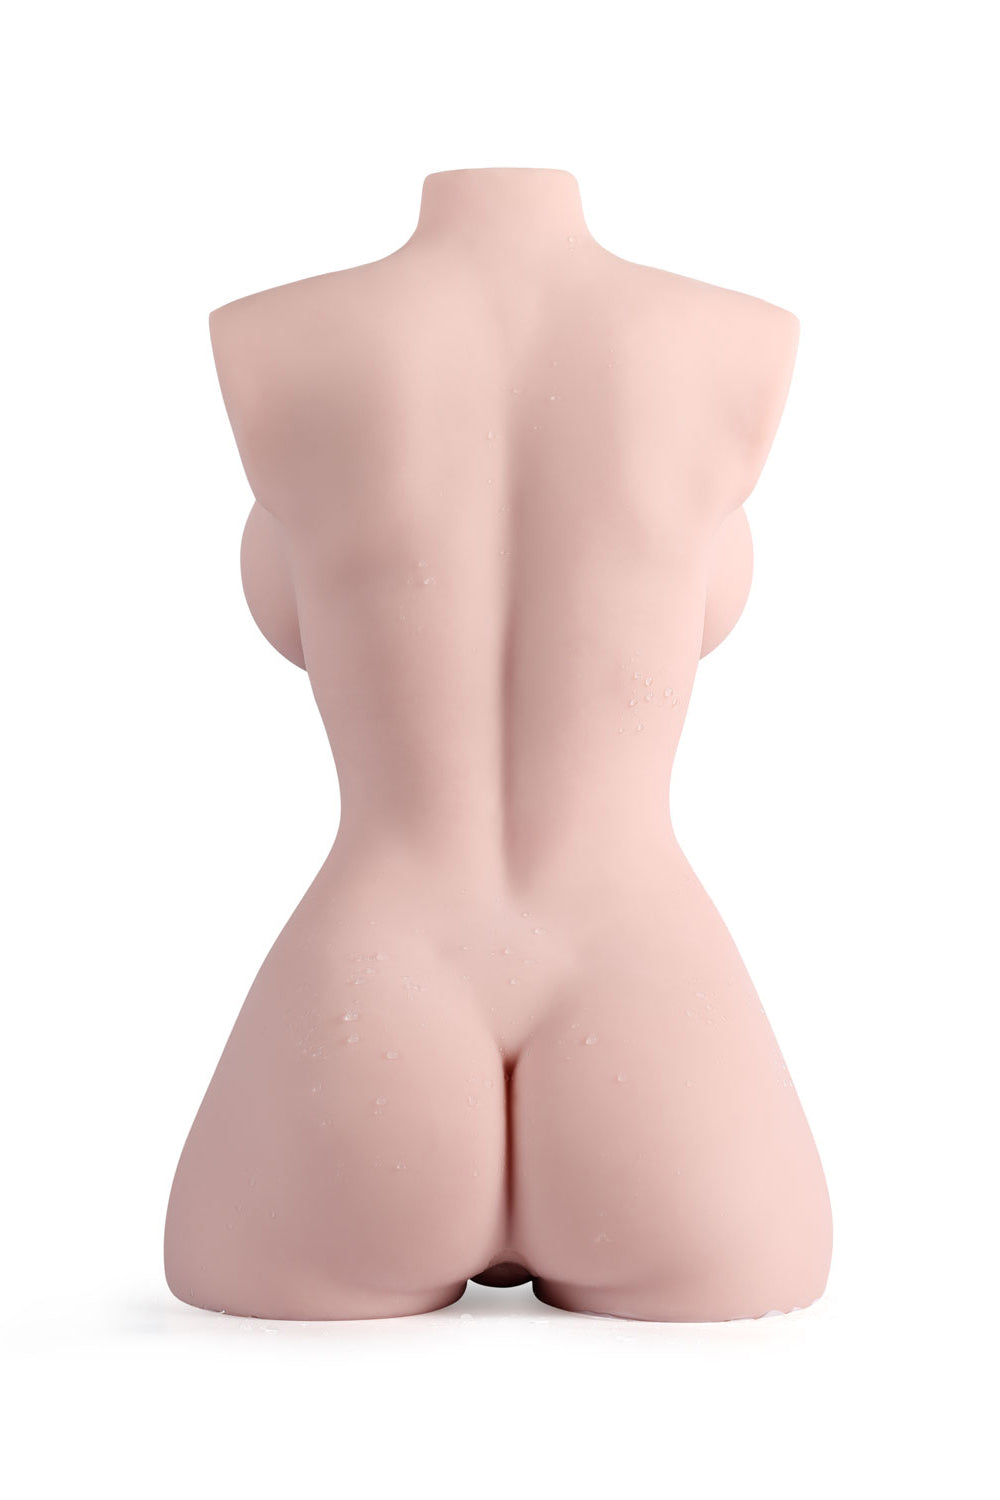 US Stock - TPE 19 lbs Cheap Half Body Sex Doll Torso Masturbator For Man